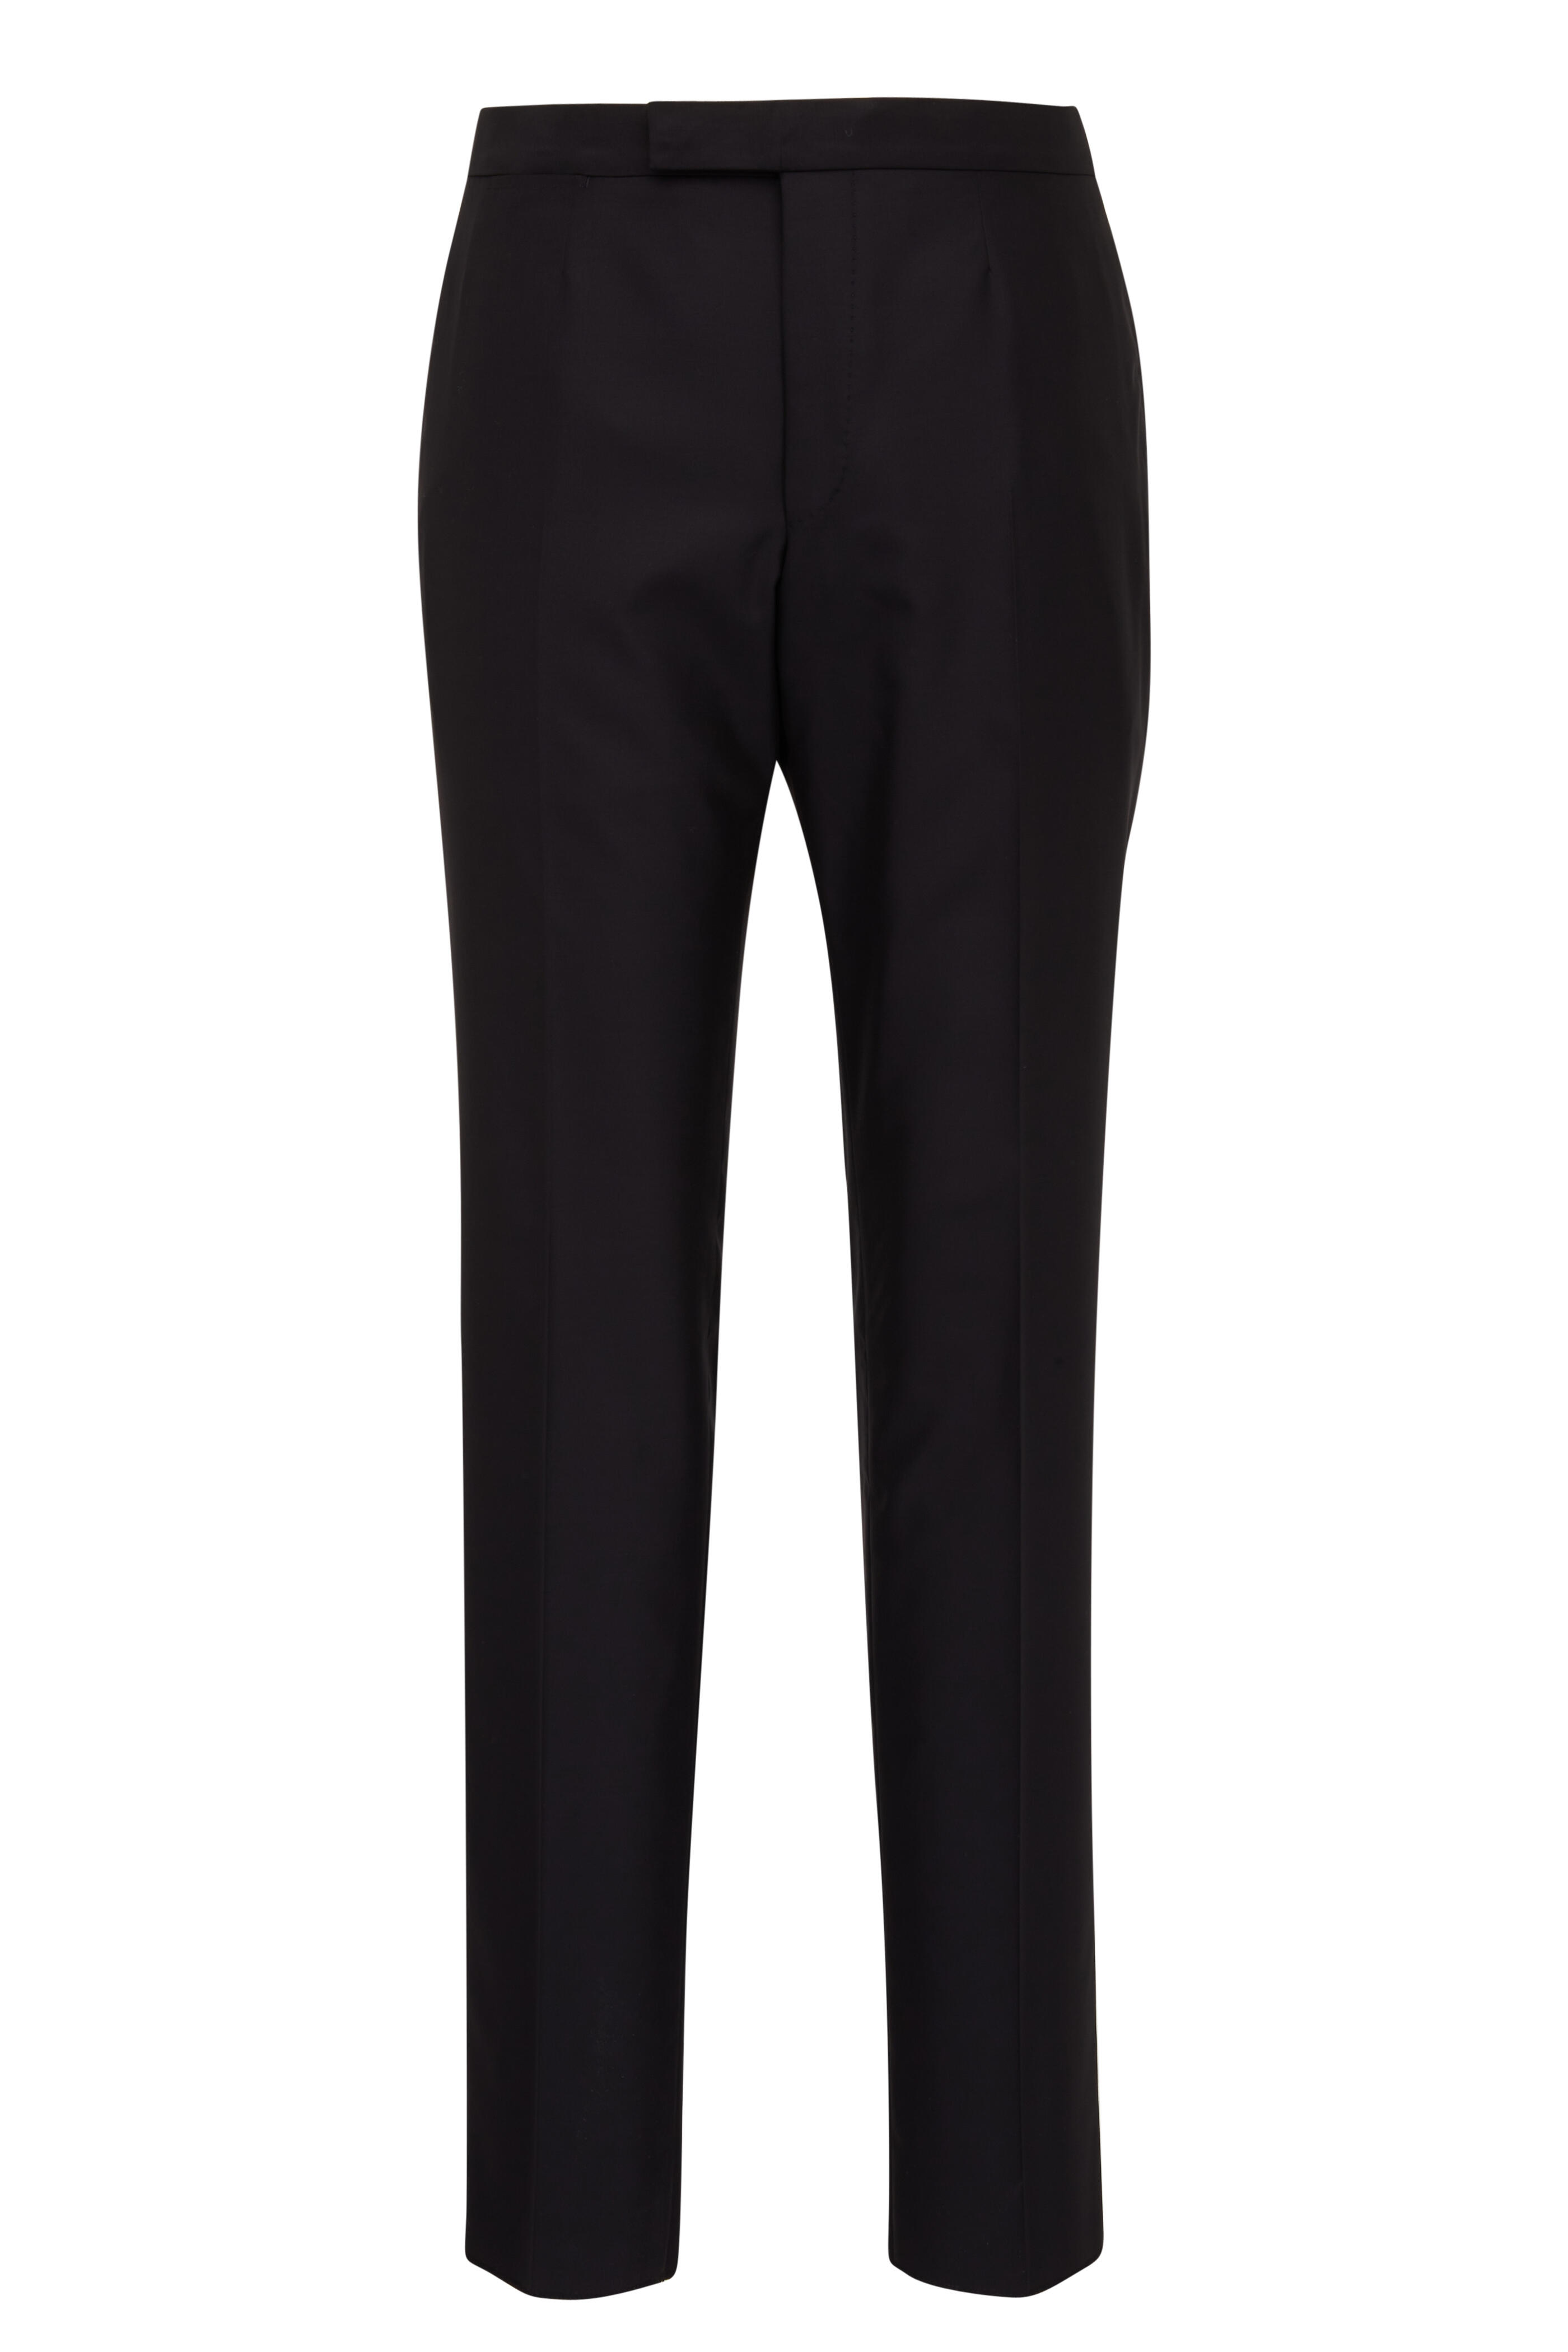 Zegna - Solid Black Trofeo™ 600 Evening Tuxedo | Mitchell Stores